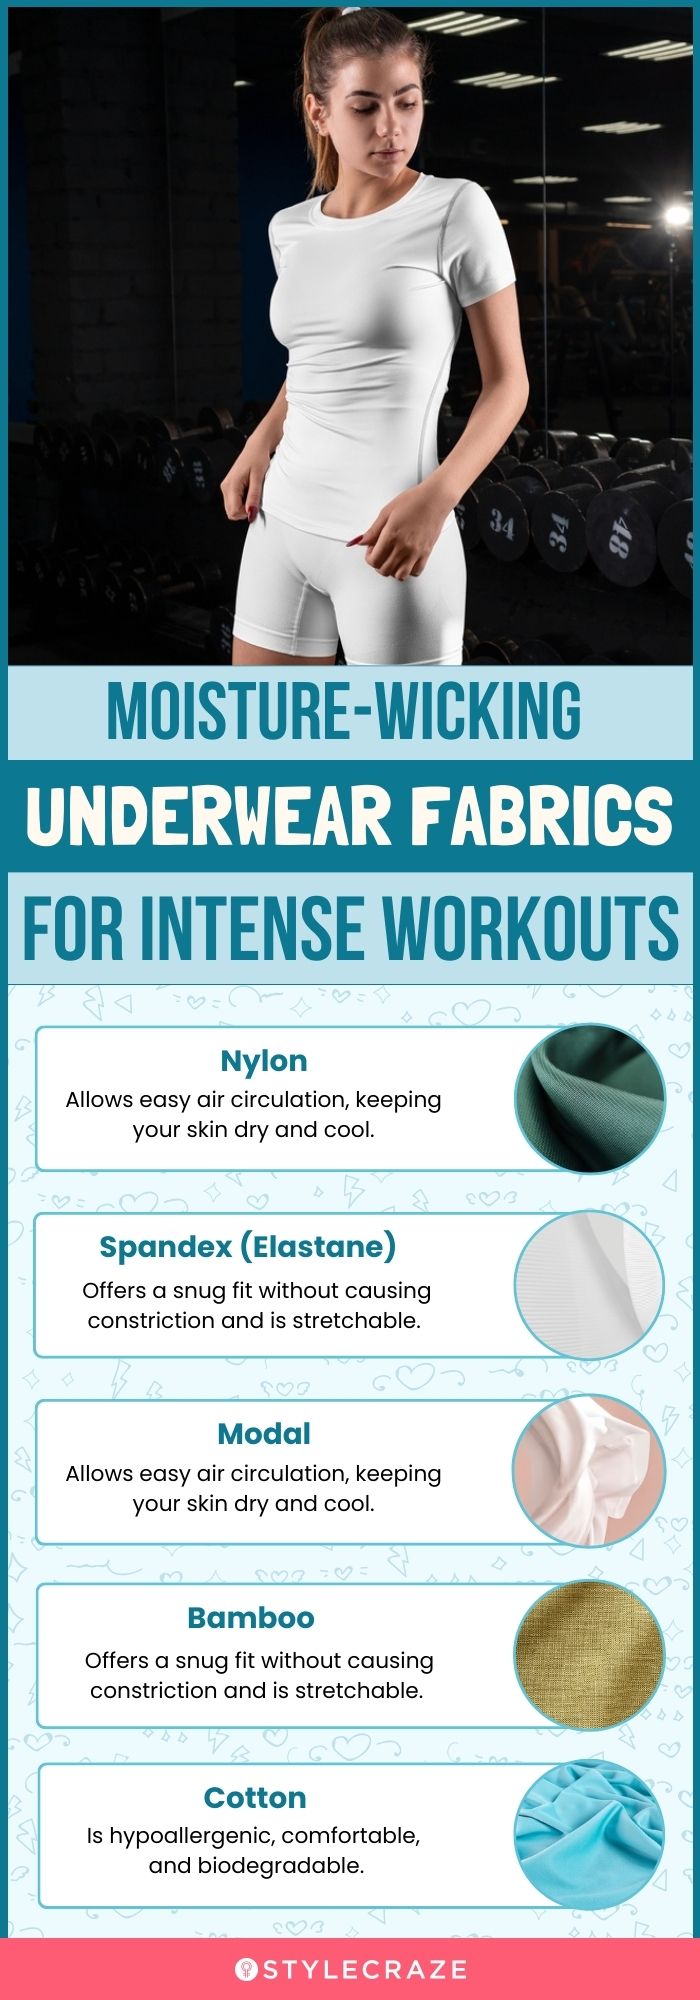 Moisture-Wicking Underwear Fabrics For Intense Workouts (infographic)